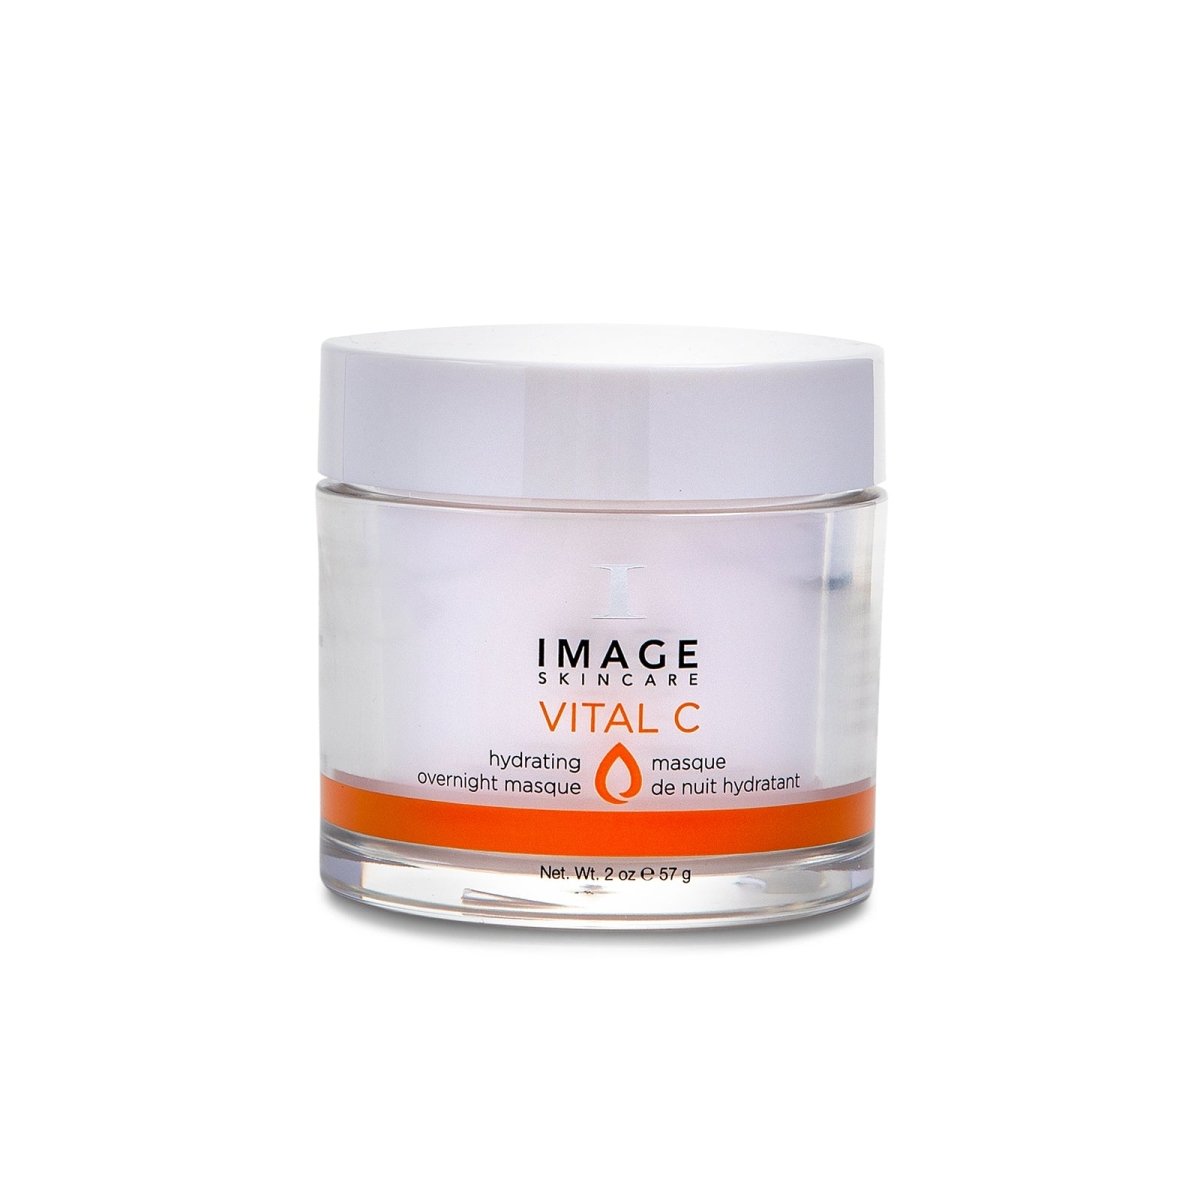 IMAGE Skincare Vital C Hydrating Overnight Masque - SkincareEssentials